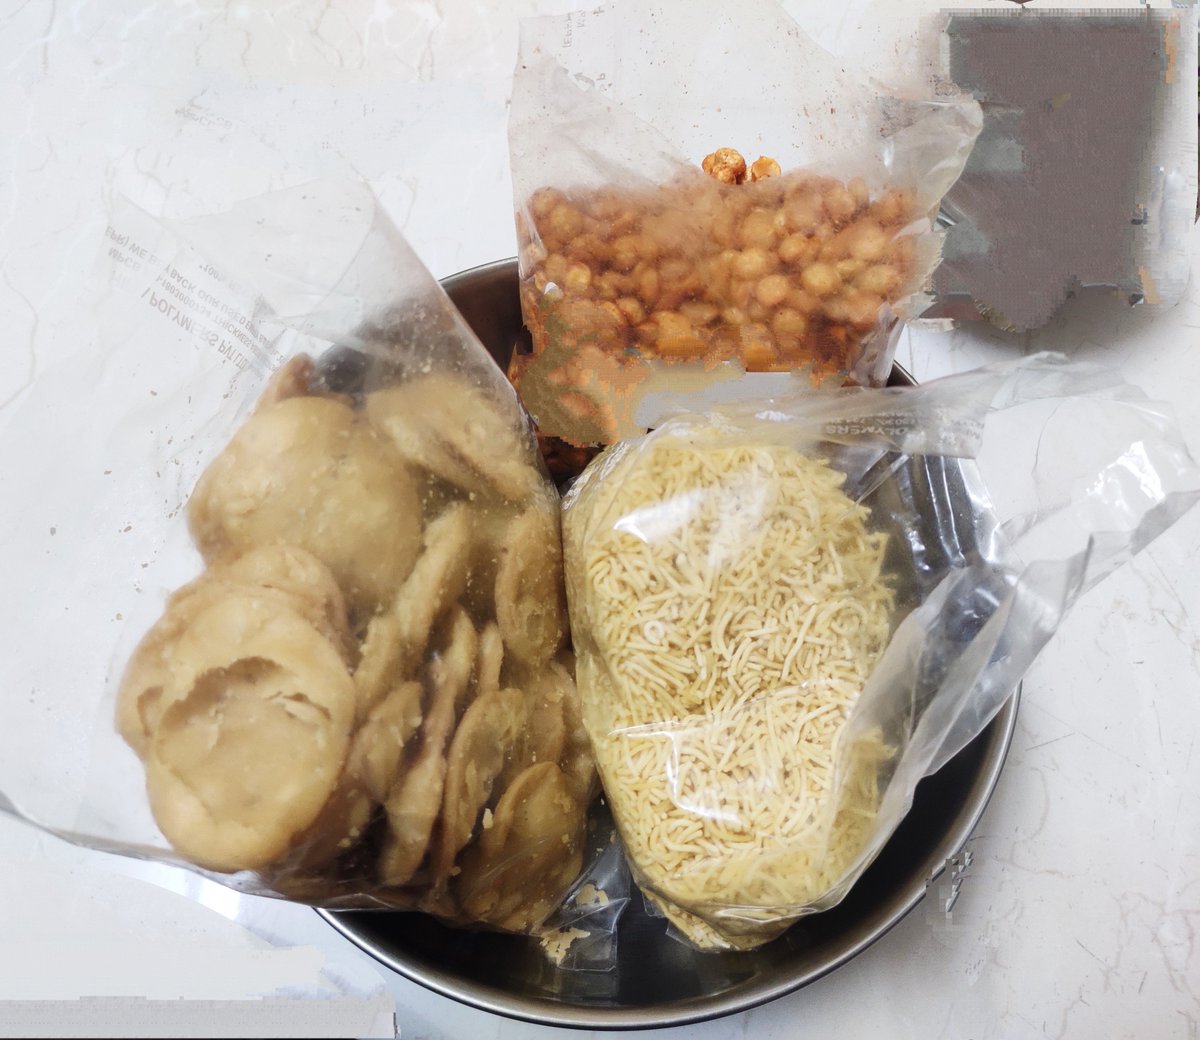 #sevpuri by Hemisha
#sevpurichaat #vegrecipesofindia #mumbaistreetfood #indiagram #mumbai #mumbaifoodblogger #mumbaidiaries #pune#punefoodblogger #punedairies #goodfood091 #foodphotography #foodpics #foodstagram 
Follow on Instagram >> @goodfood091